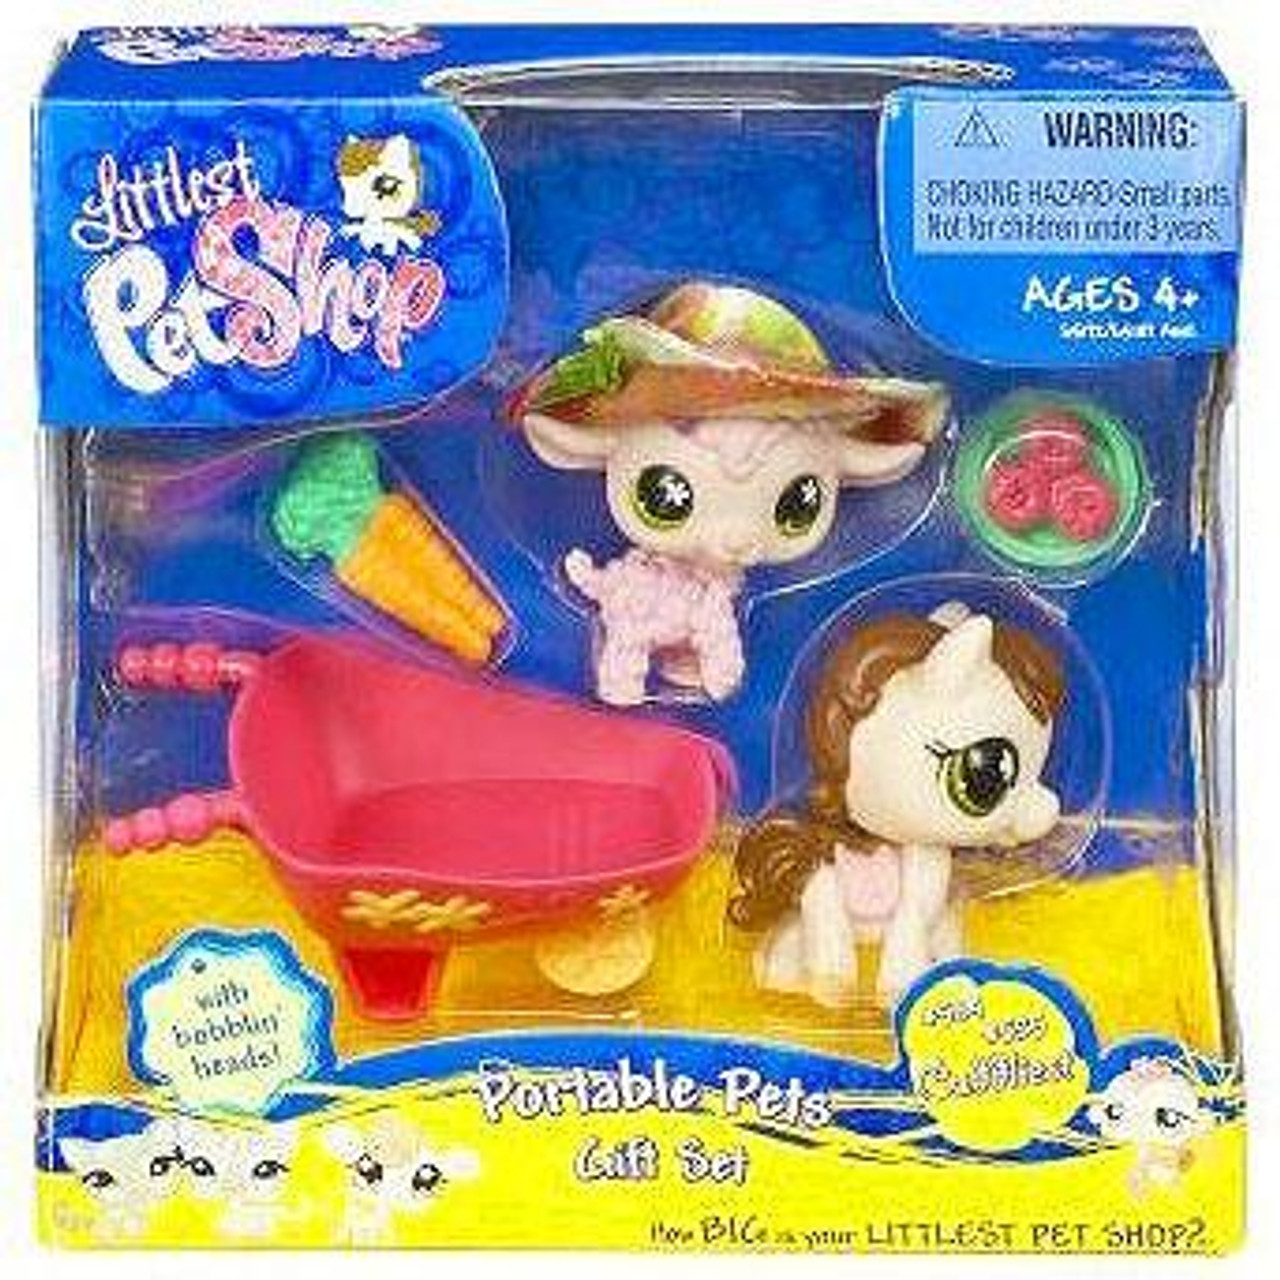 Littlest Pet Shop Cuddliest Pink Sheep Horse Portable Gift Set Hasbro Toys Toywiz - pink sheep roblox horror games